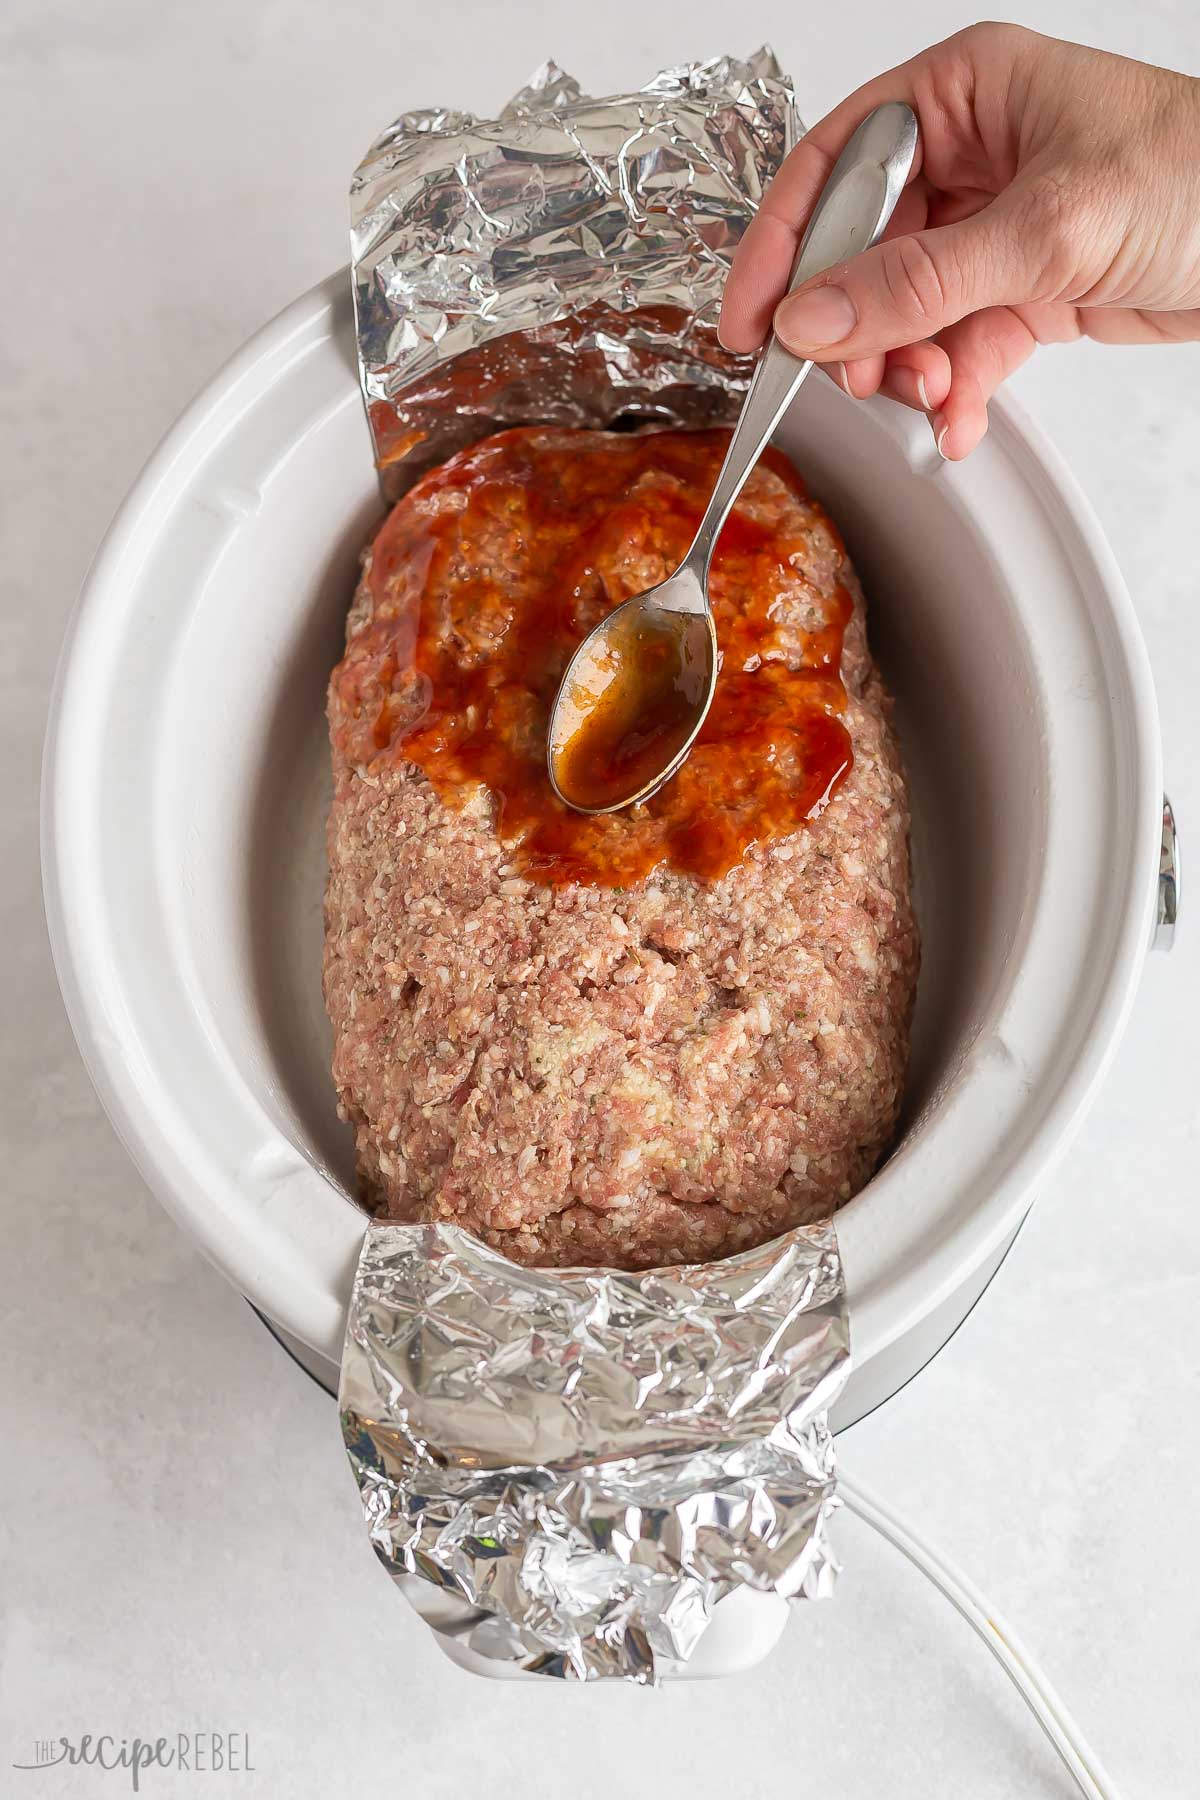 glaze being spread on uncooked crockpot meatloaf.